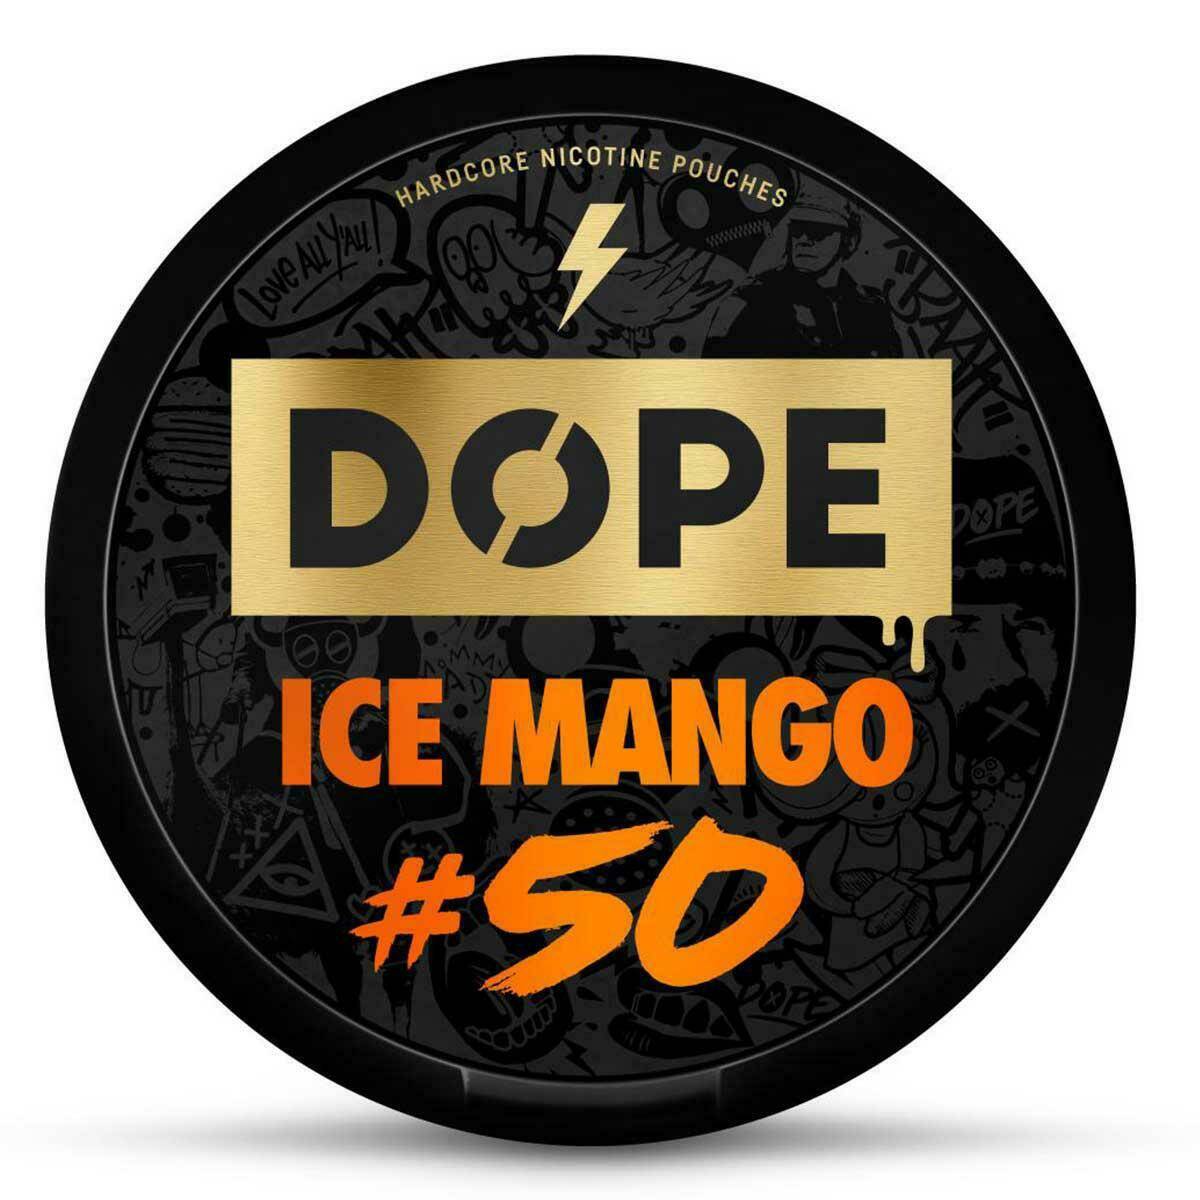 SEL - Saszetki nikotynowe DOPE - Ice Mango 50mg/g